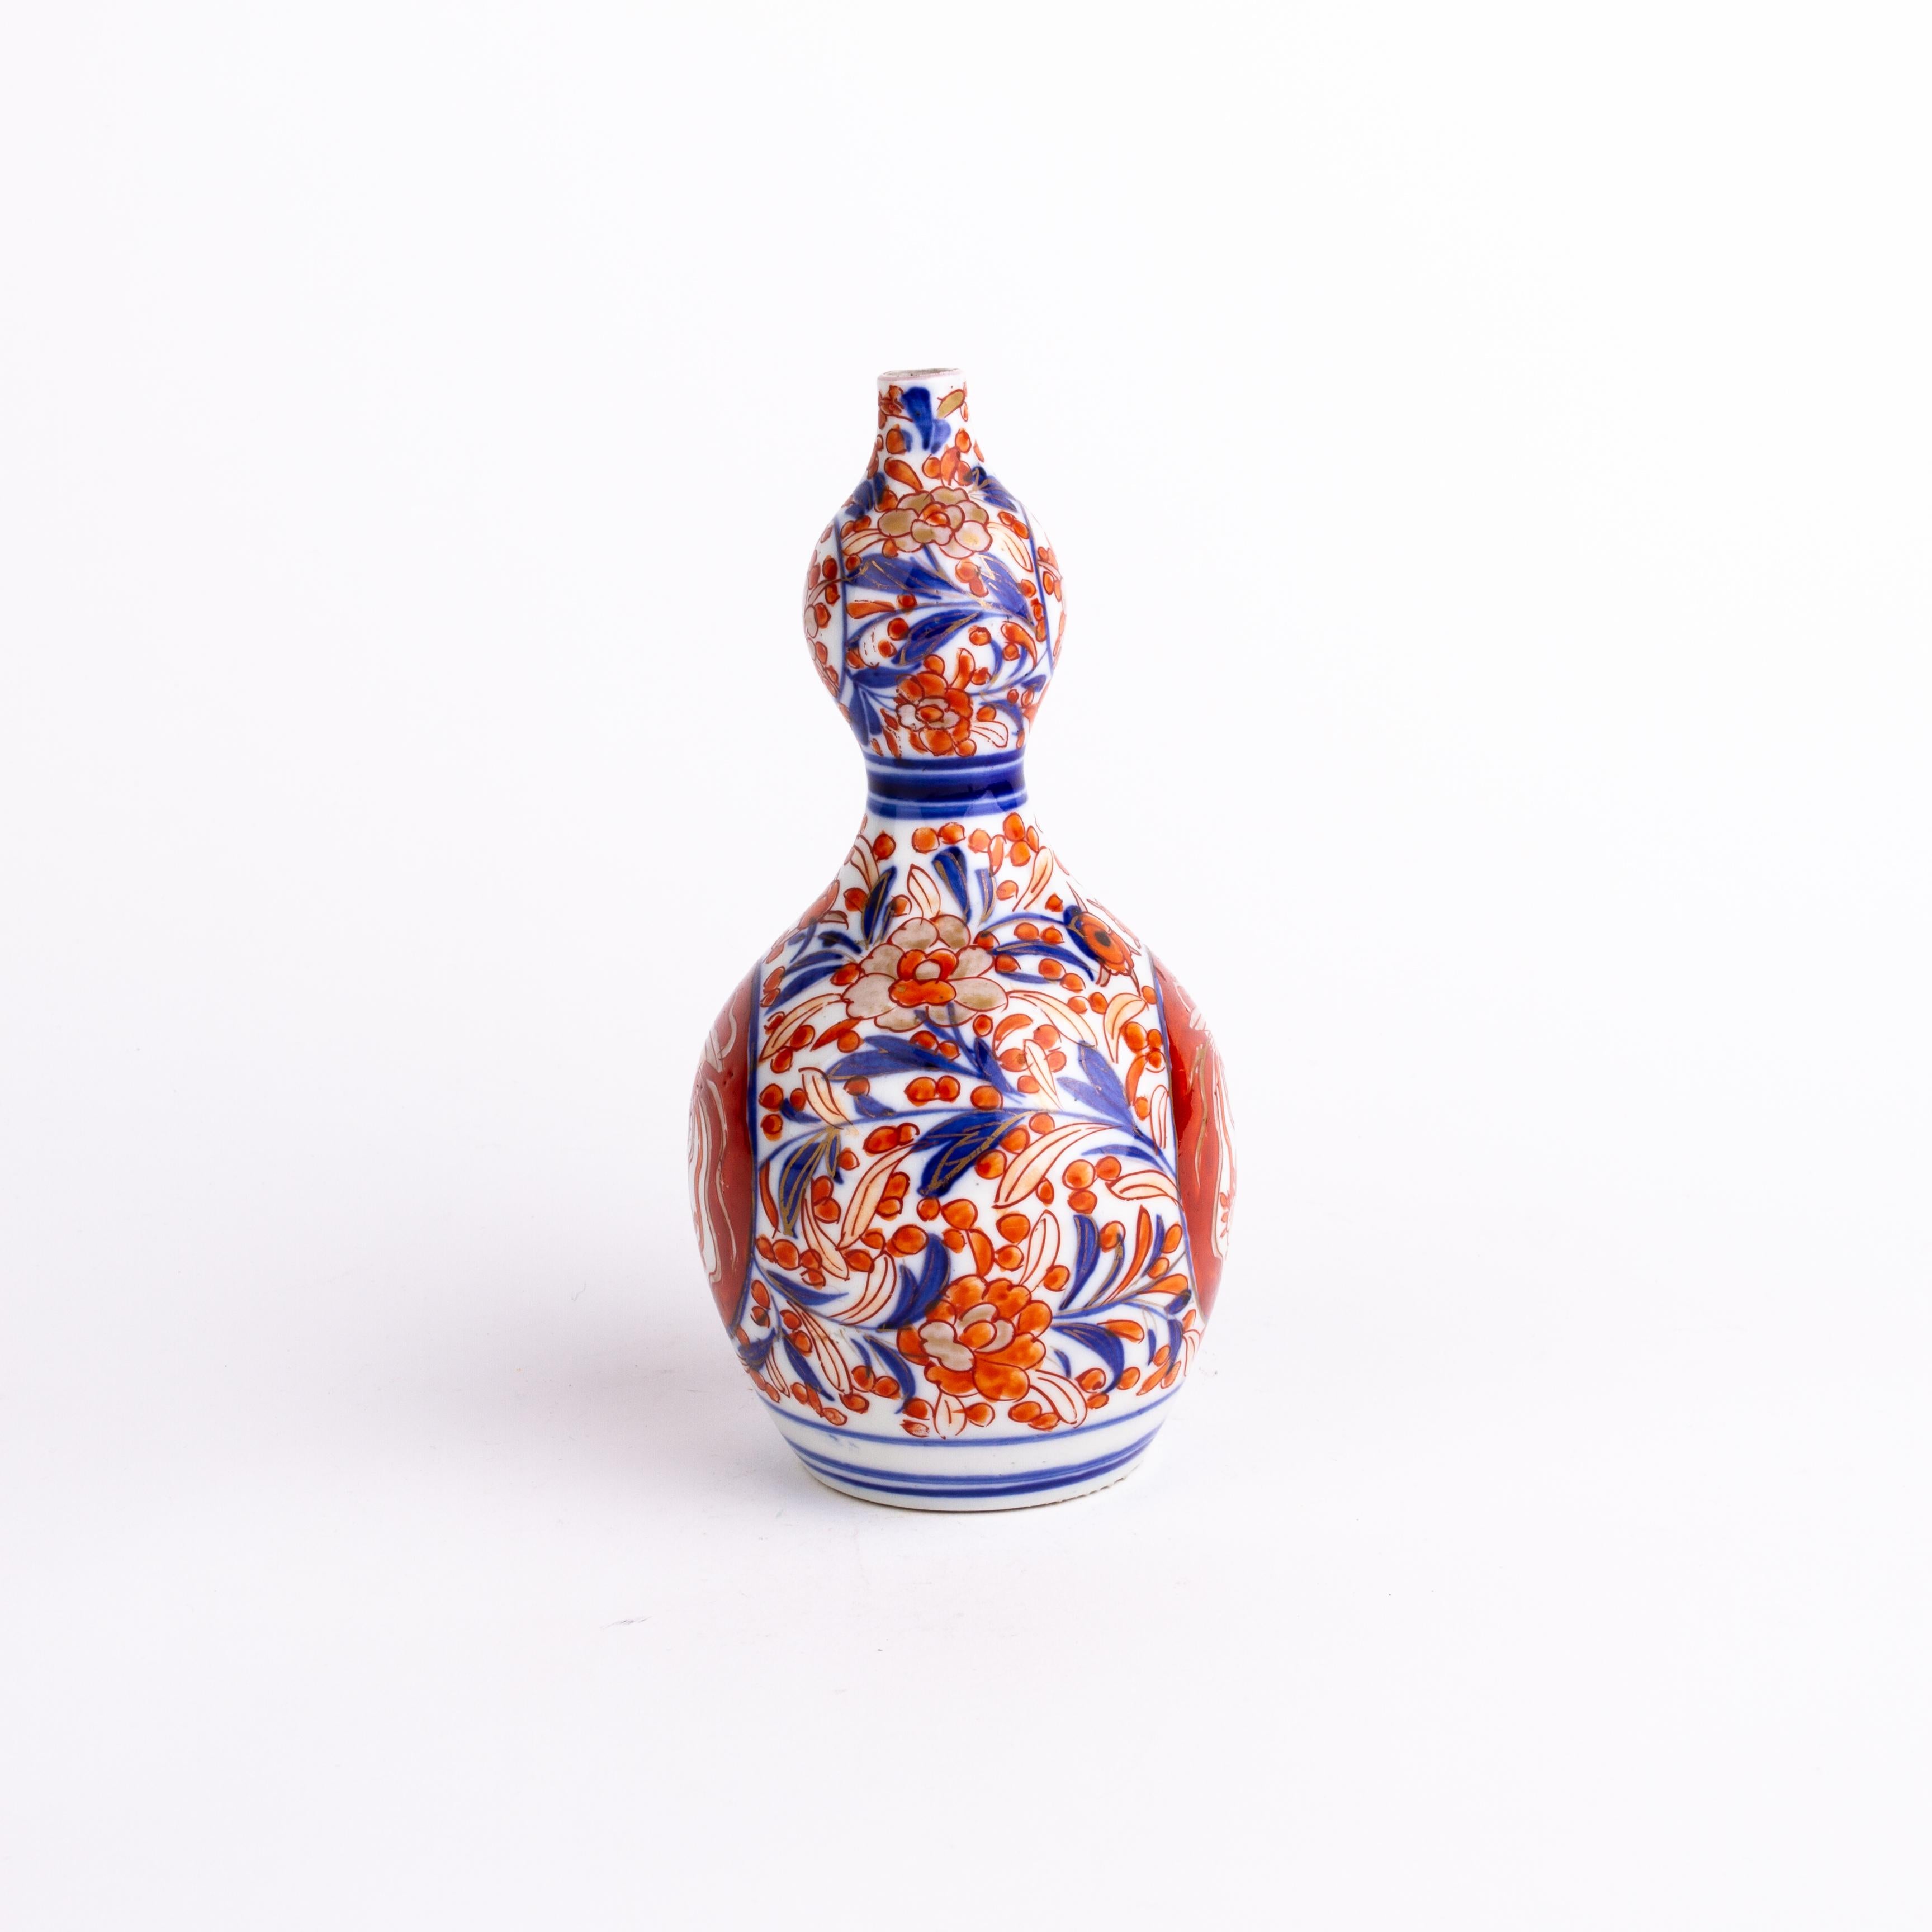 Japanese Imari Porcelain Double Gourd Vase 19th Century Meiji
Good condition
Free international shipping.